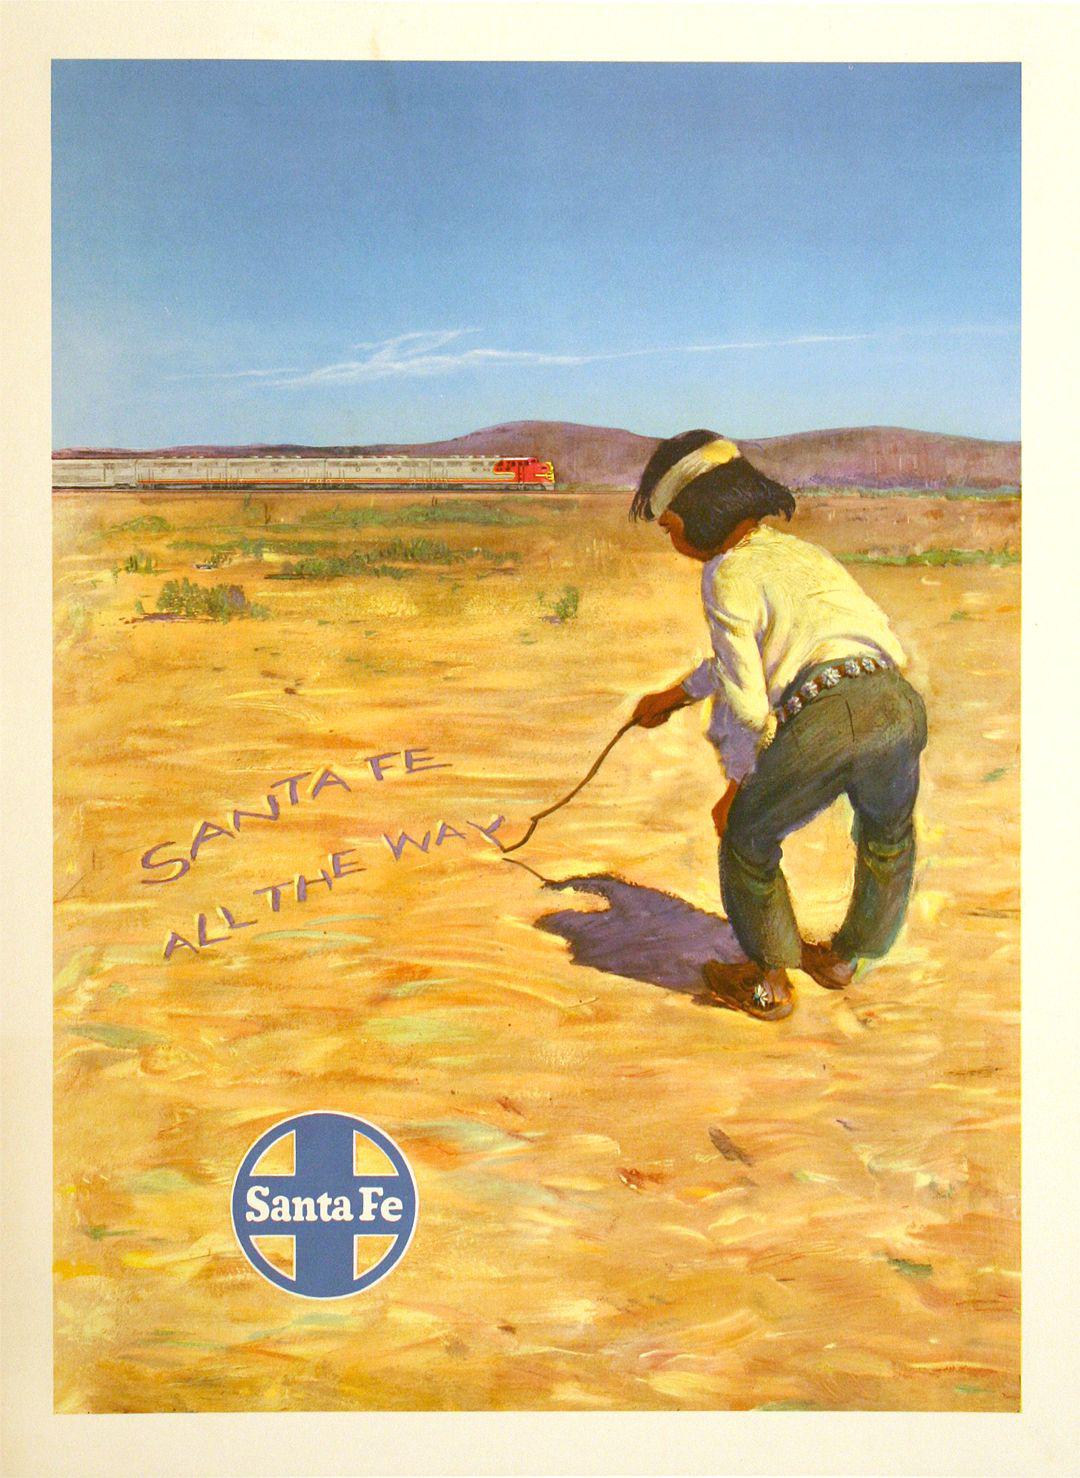 Original Santa Fe Rail Poster c1950 All The Way Indian Boy